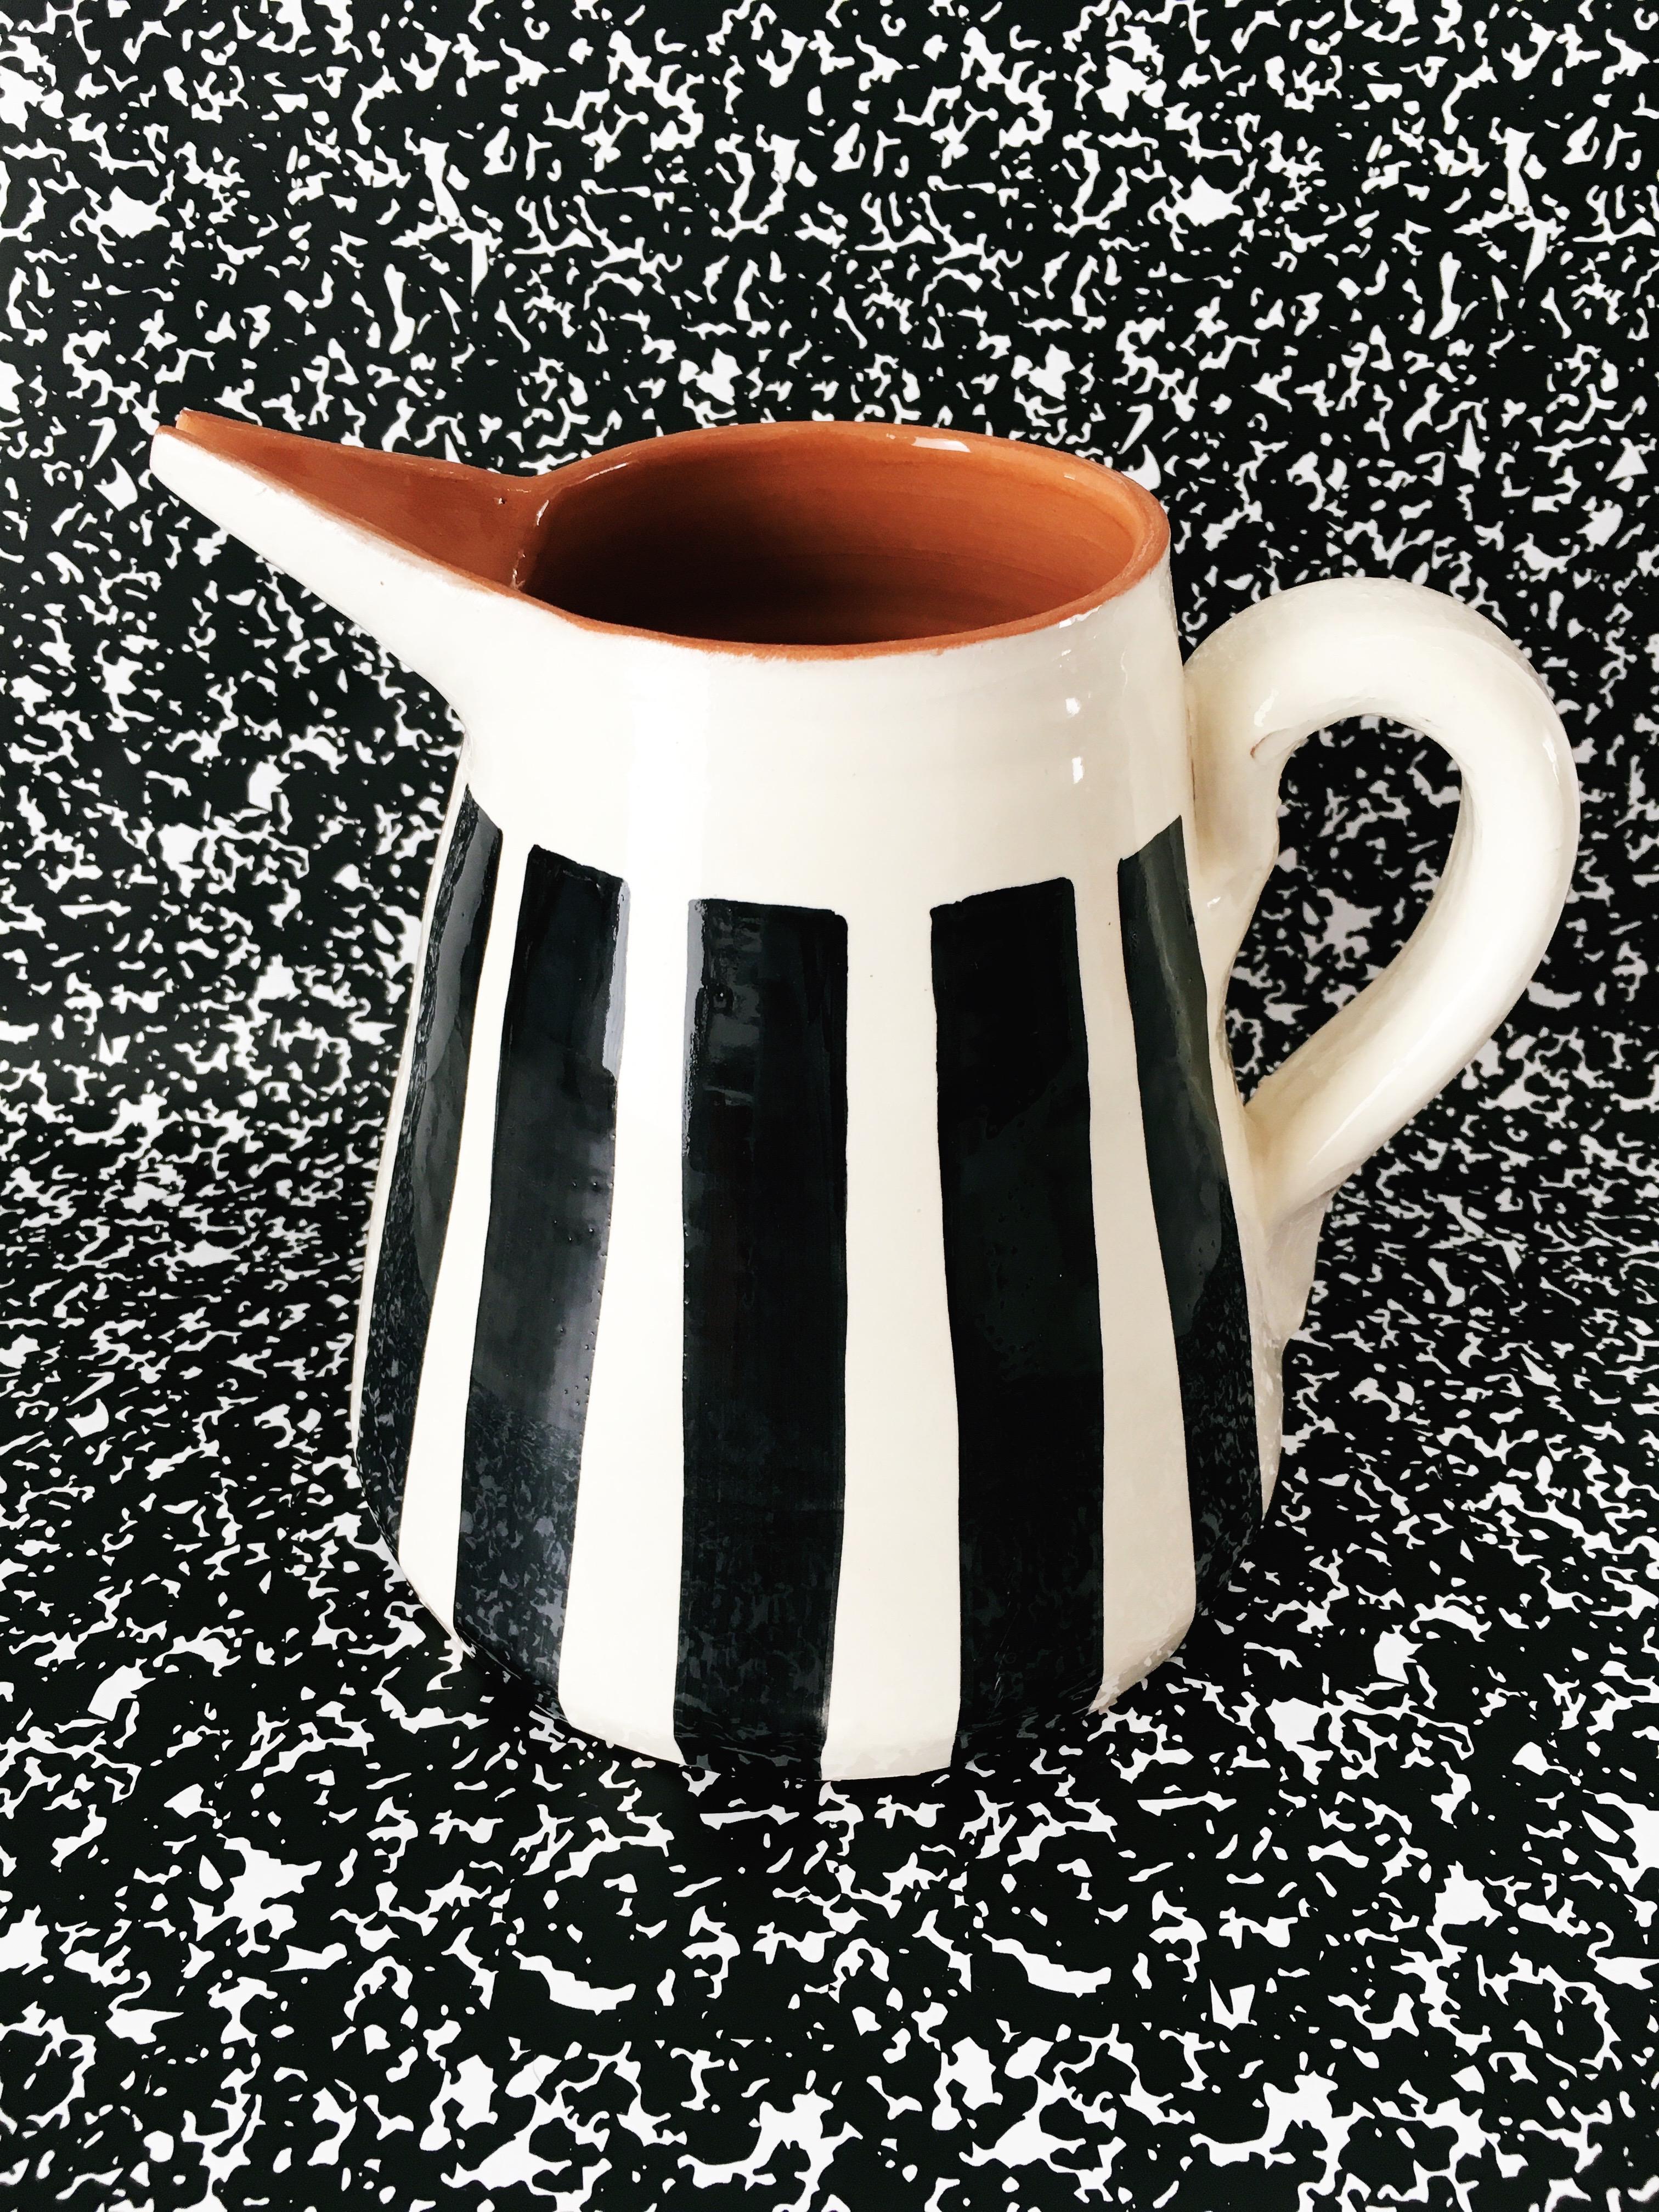 Portuguese Handmade Ceramic Medium Pitcher with Graphic Black and White Design, in Stock